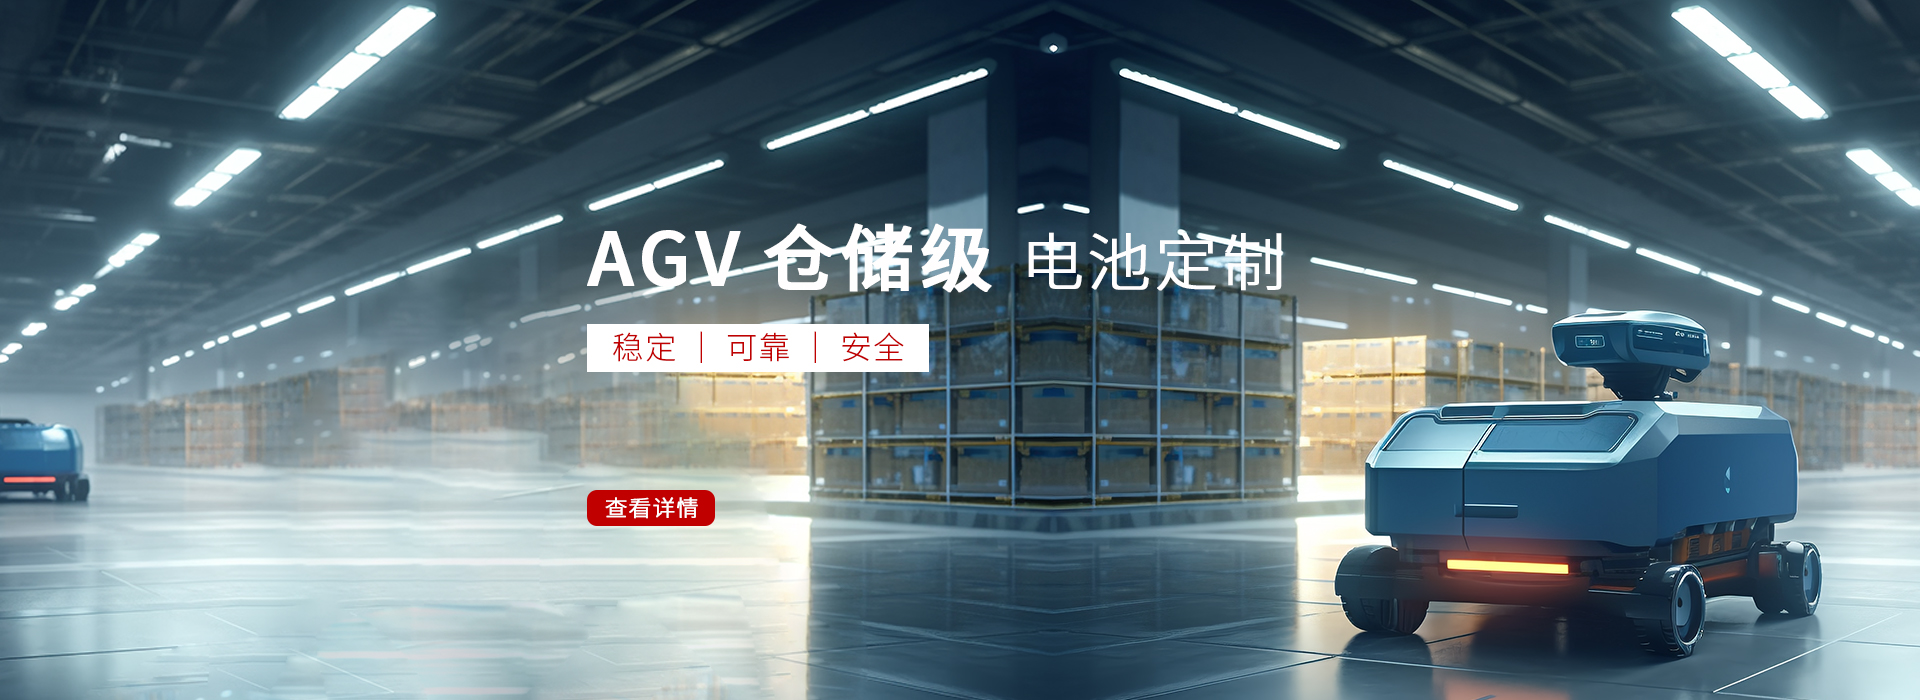 AGV/RGV锂电池